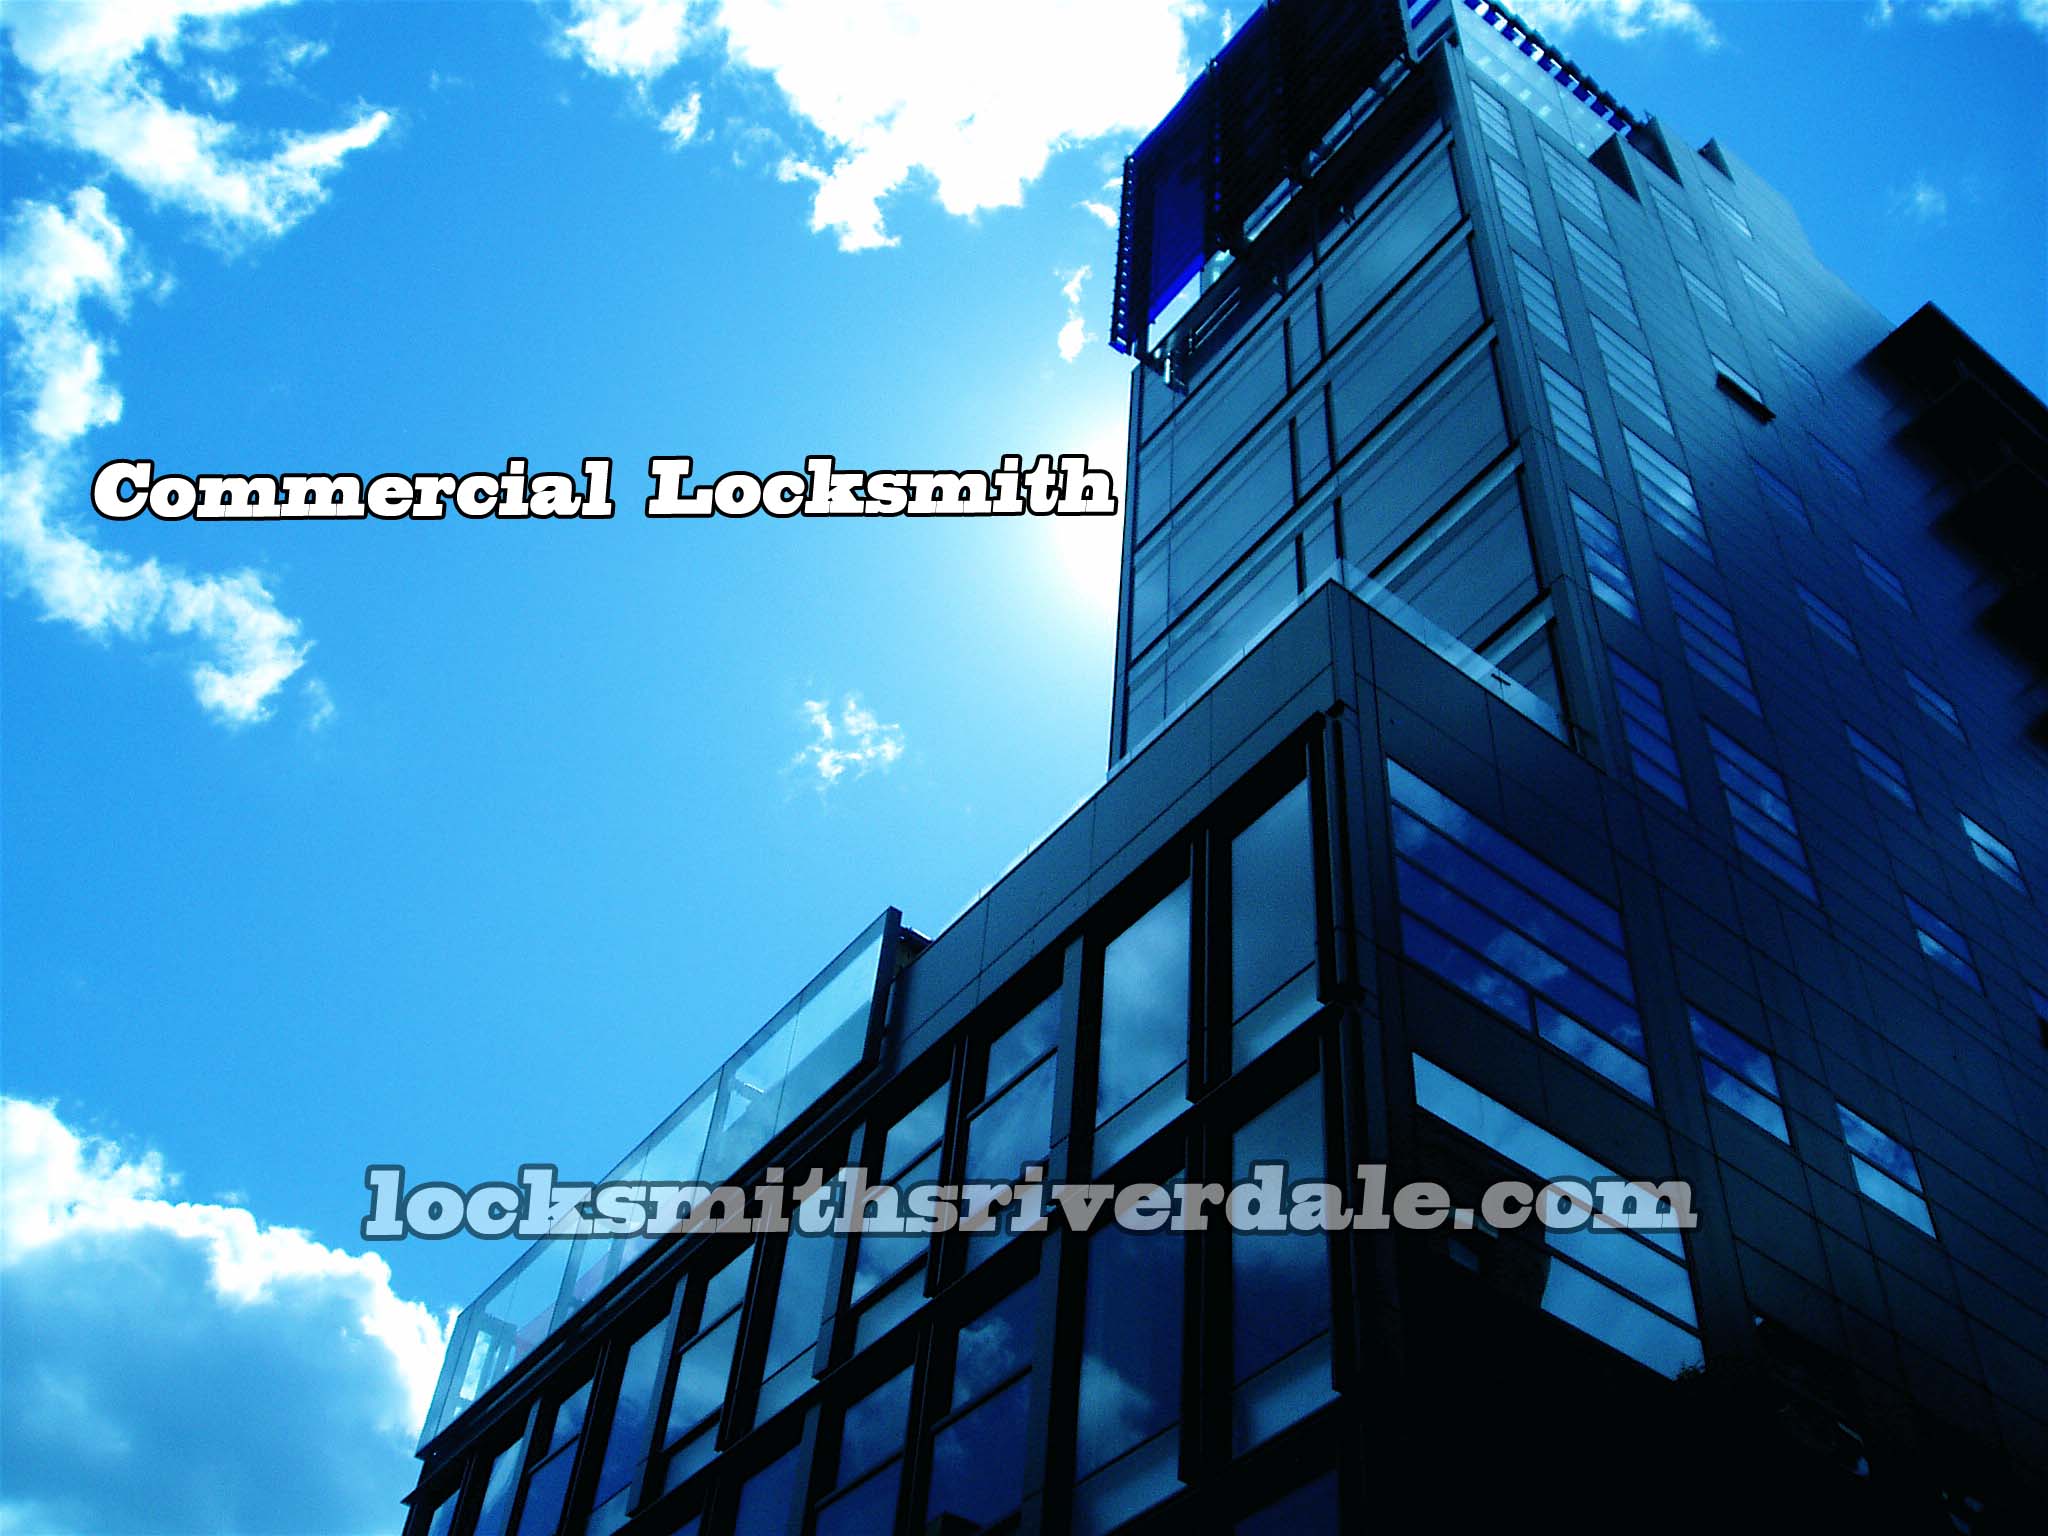 Commercial Riverdale Locksmith